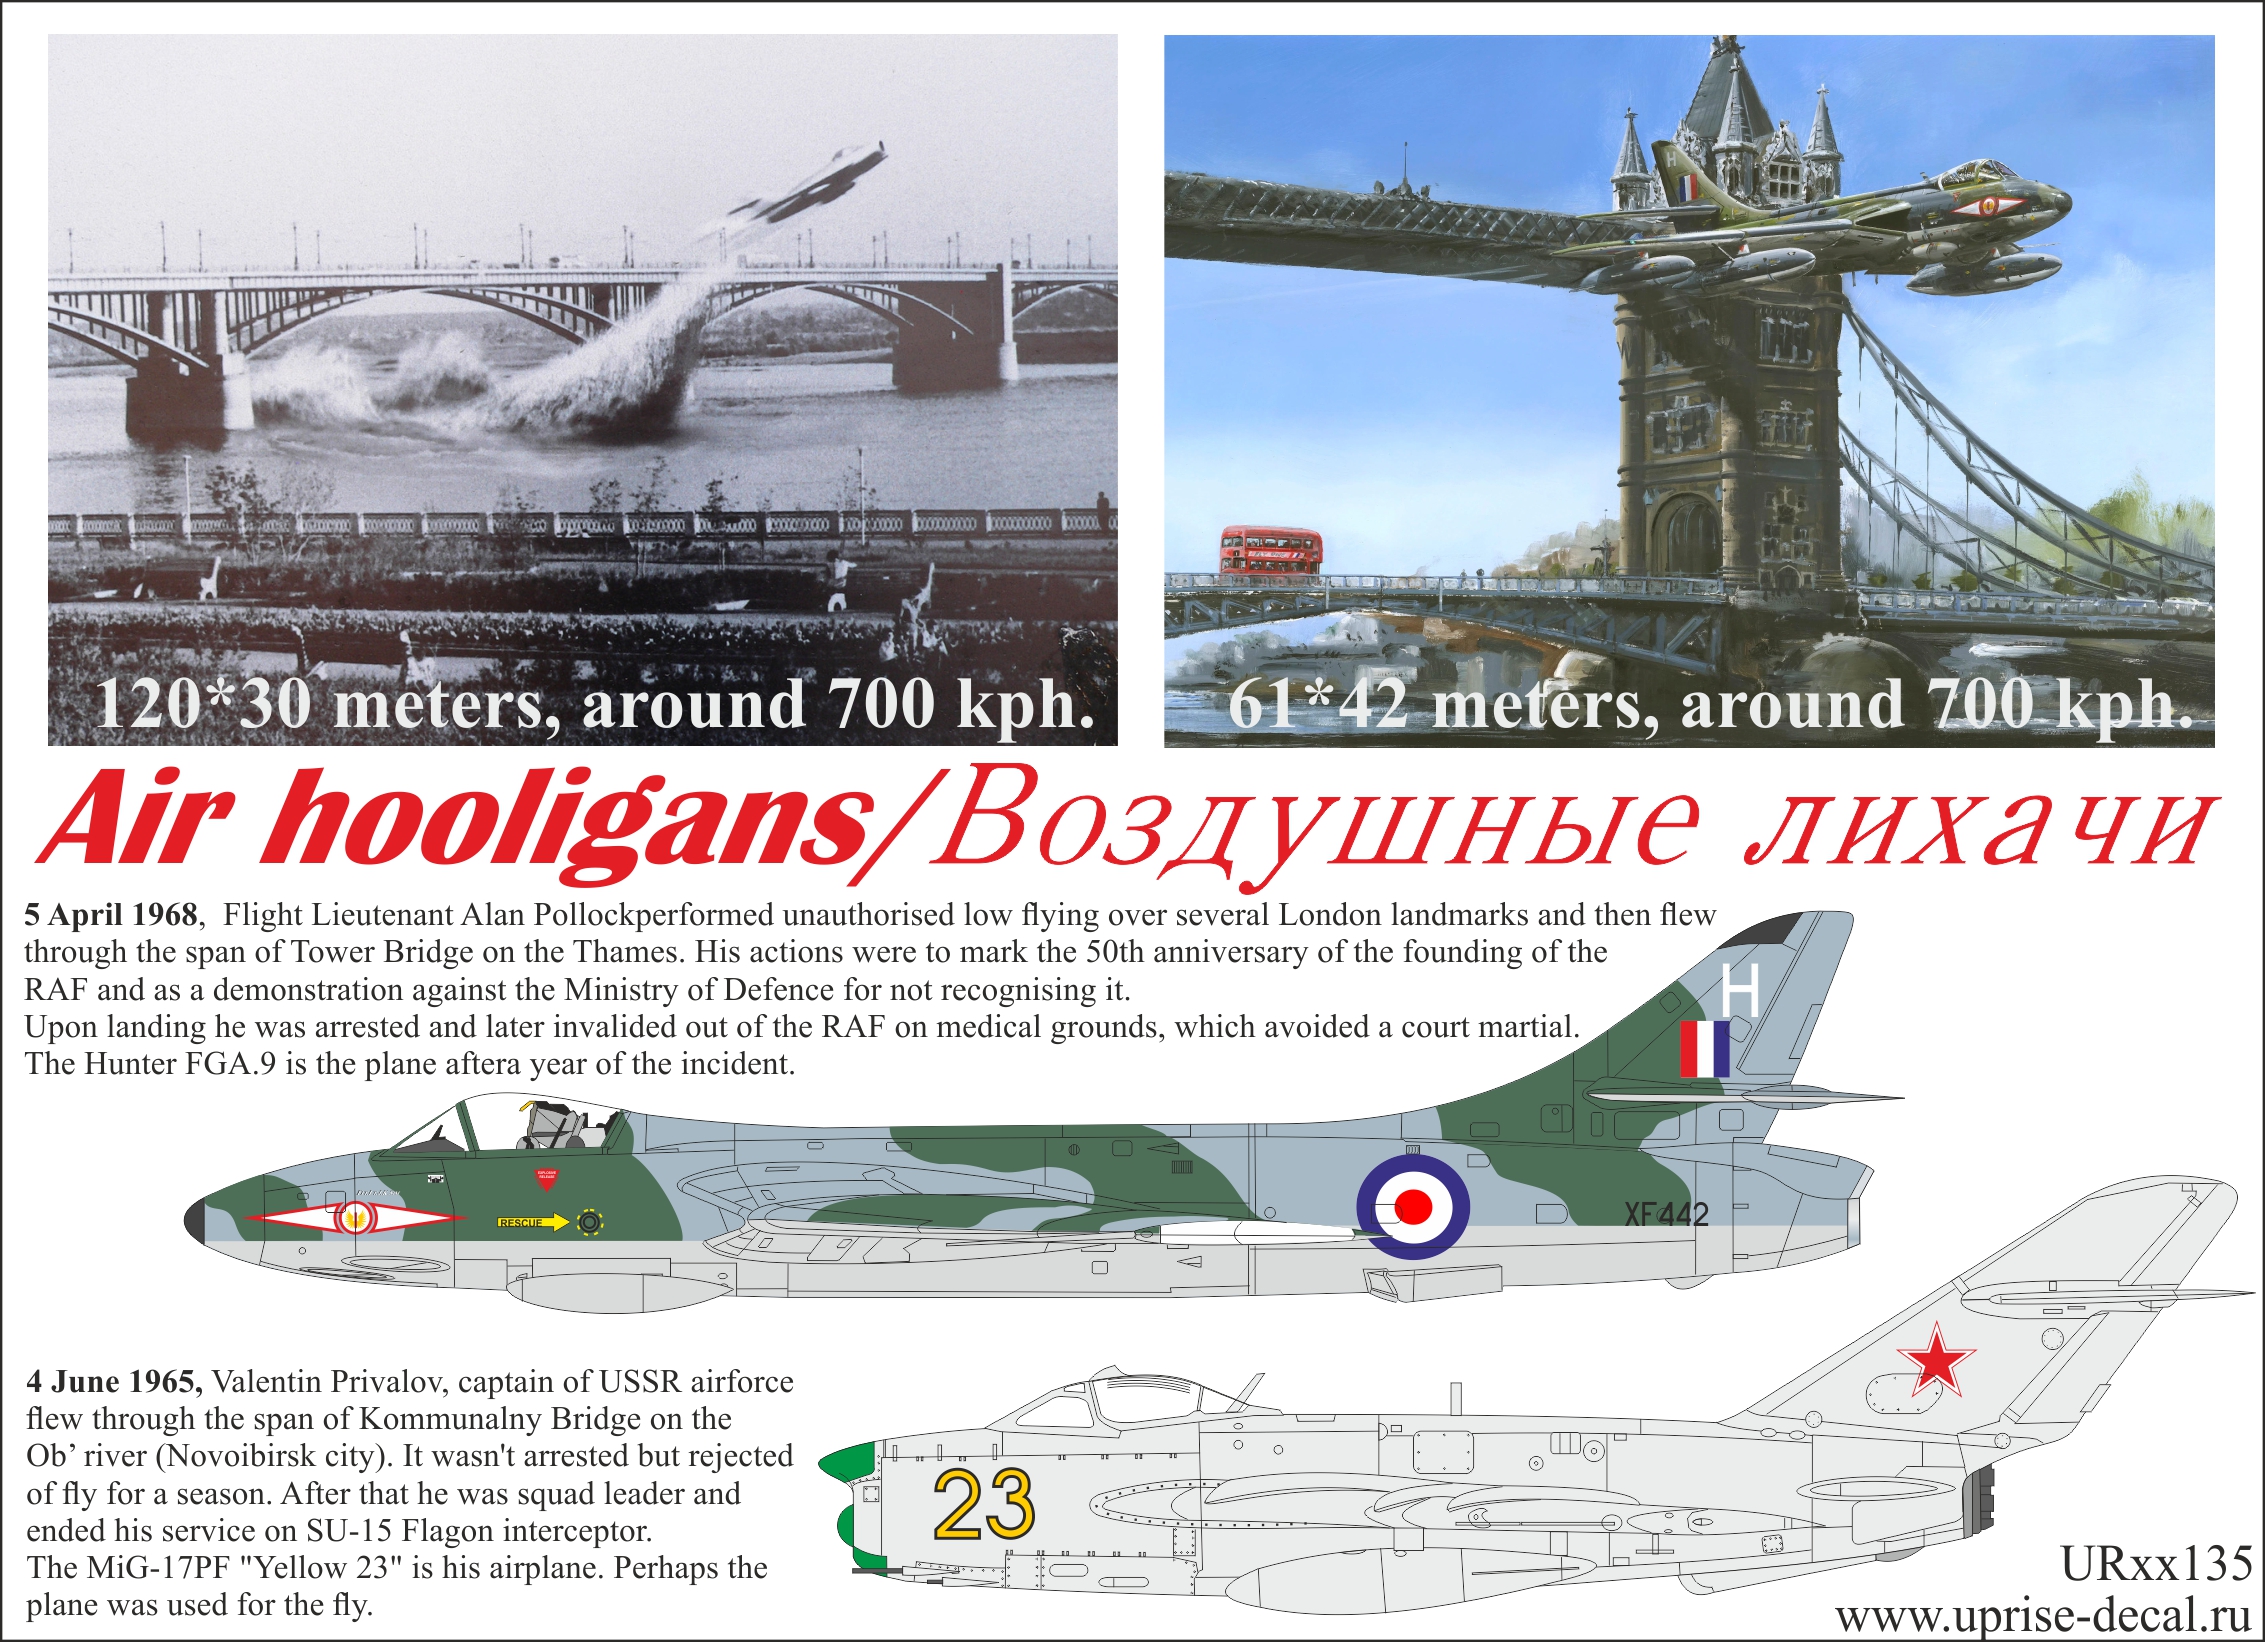 UR48135  декали  Air hooligans Hawker Hunter FGA.9  & MiG-17PF  (1:48)